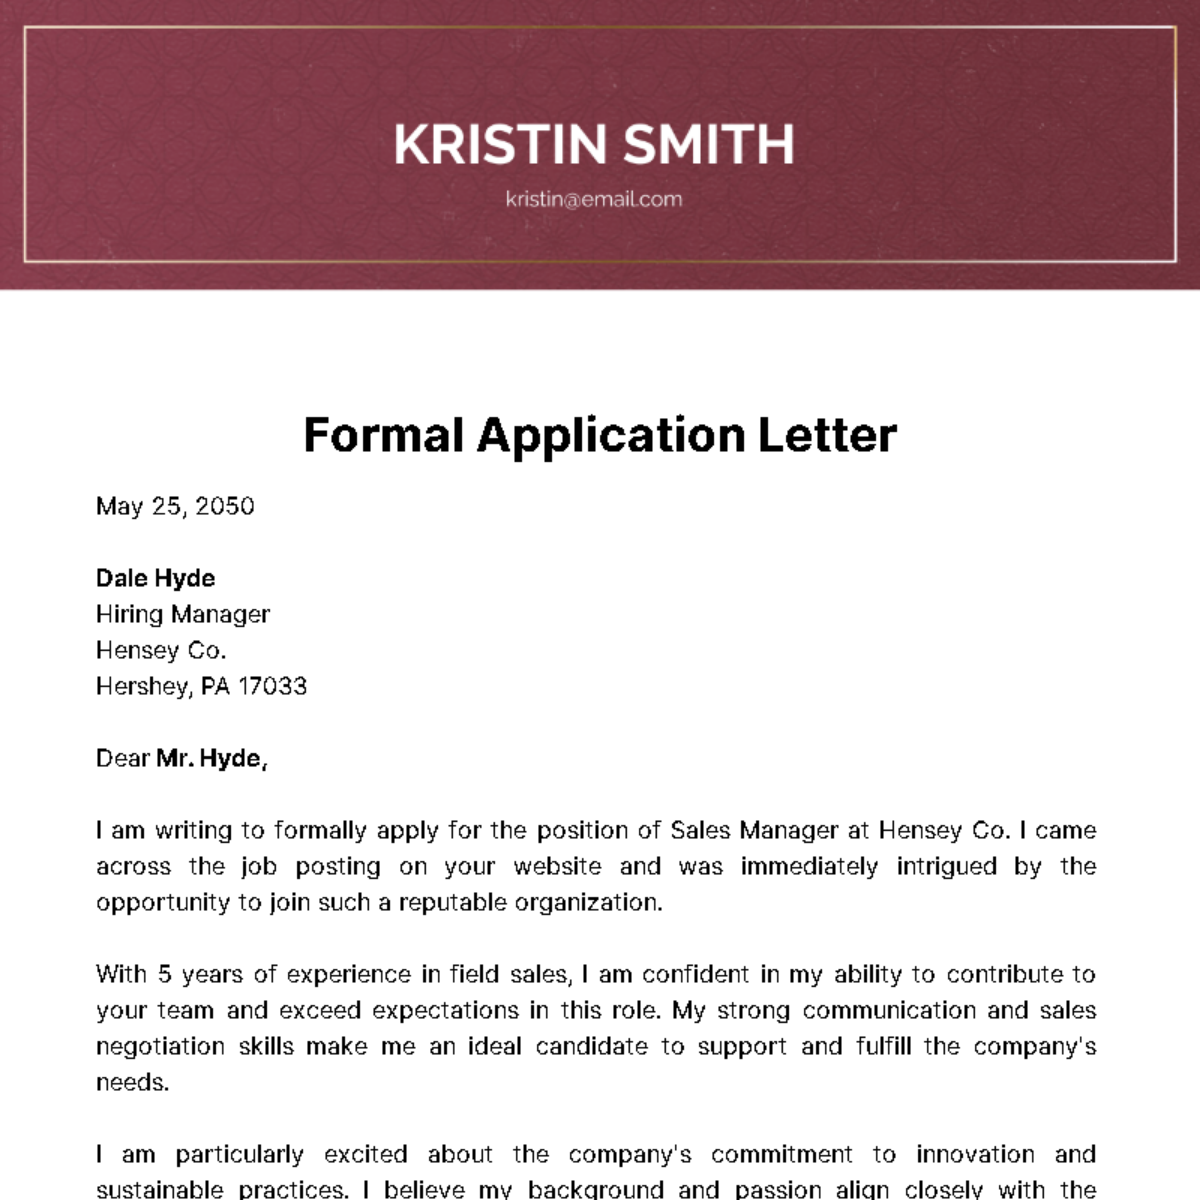 Formal Application Letter Template